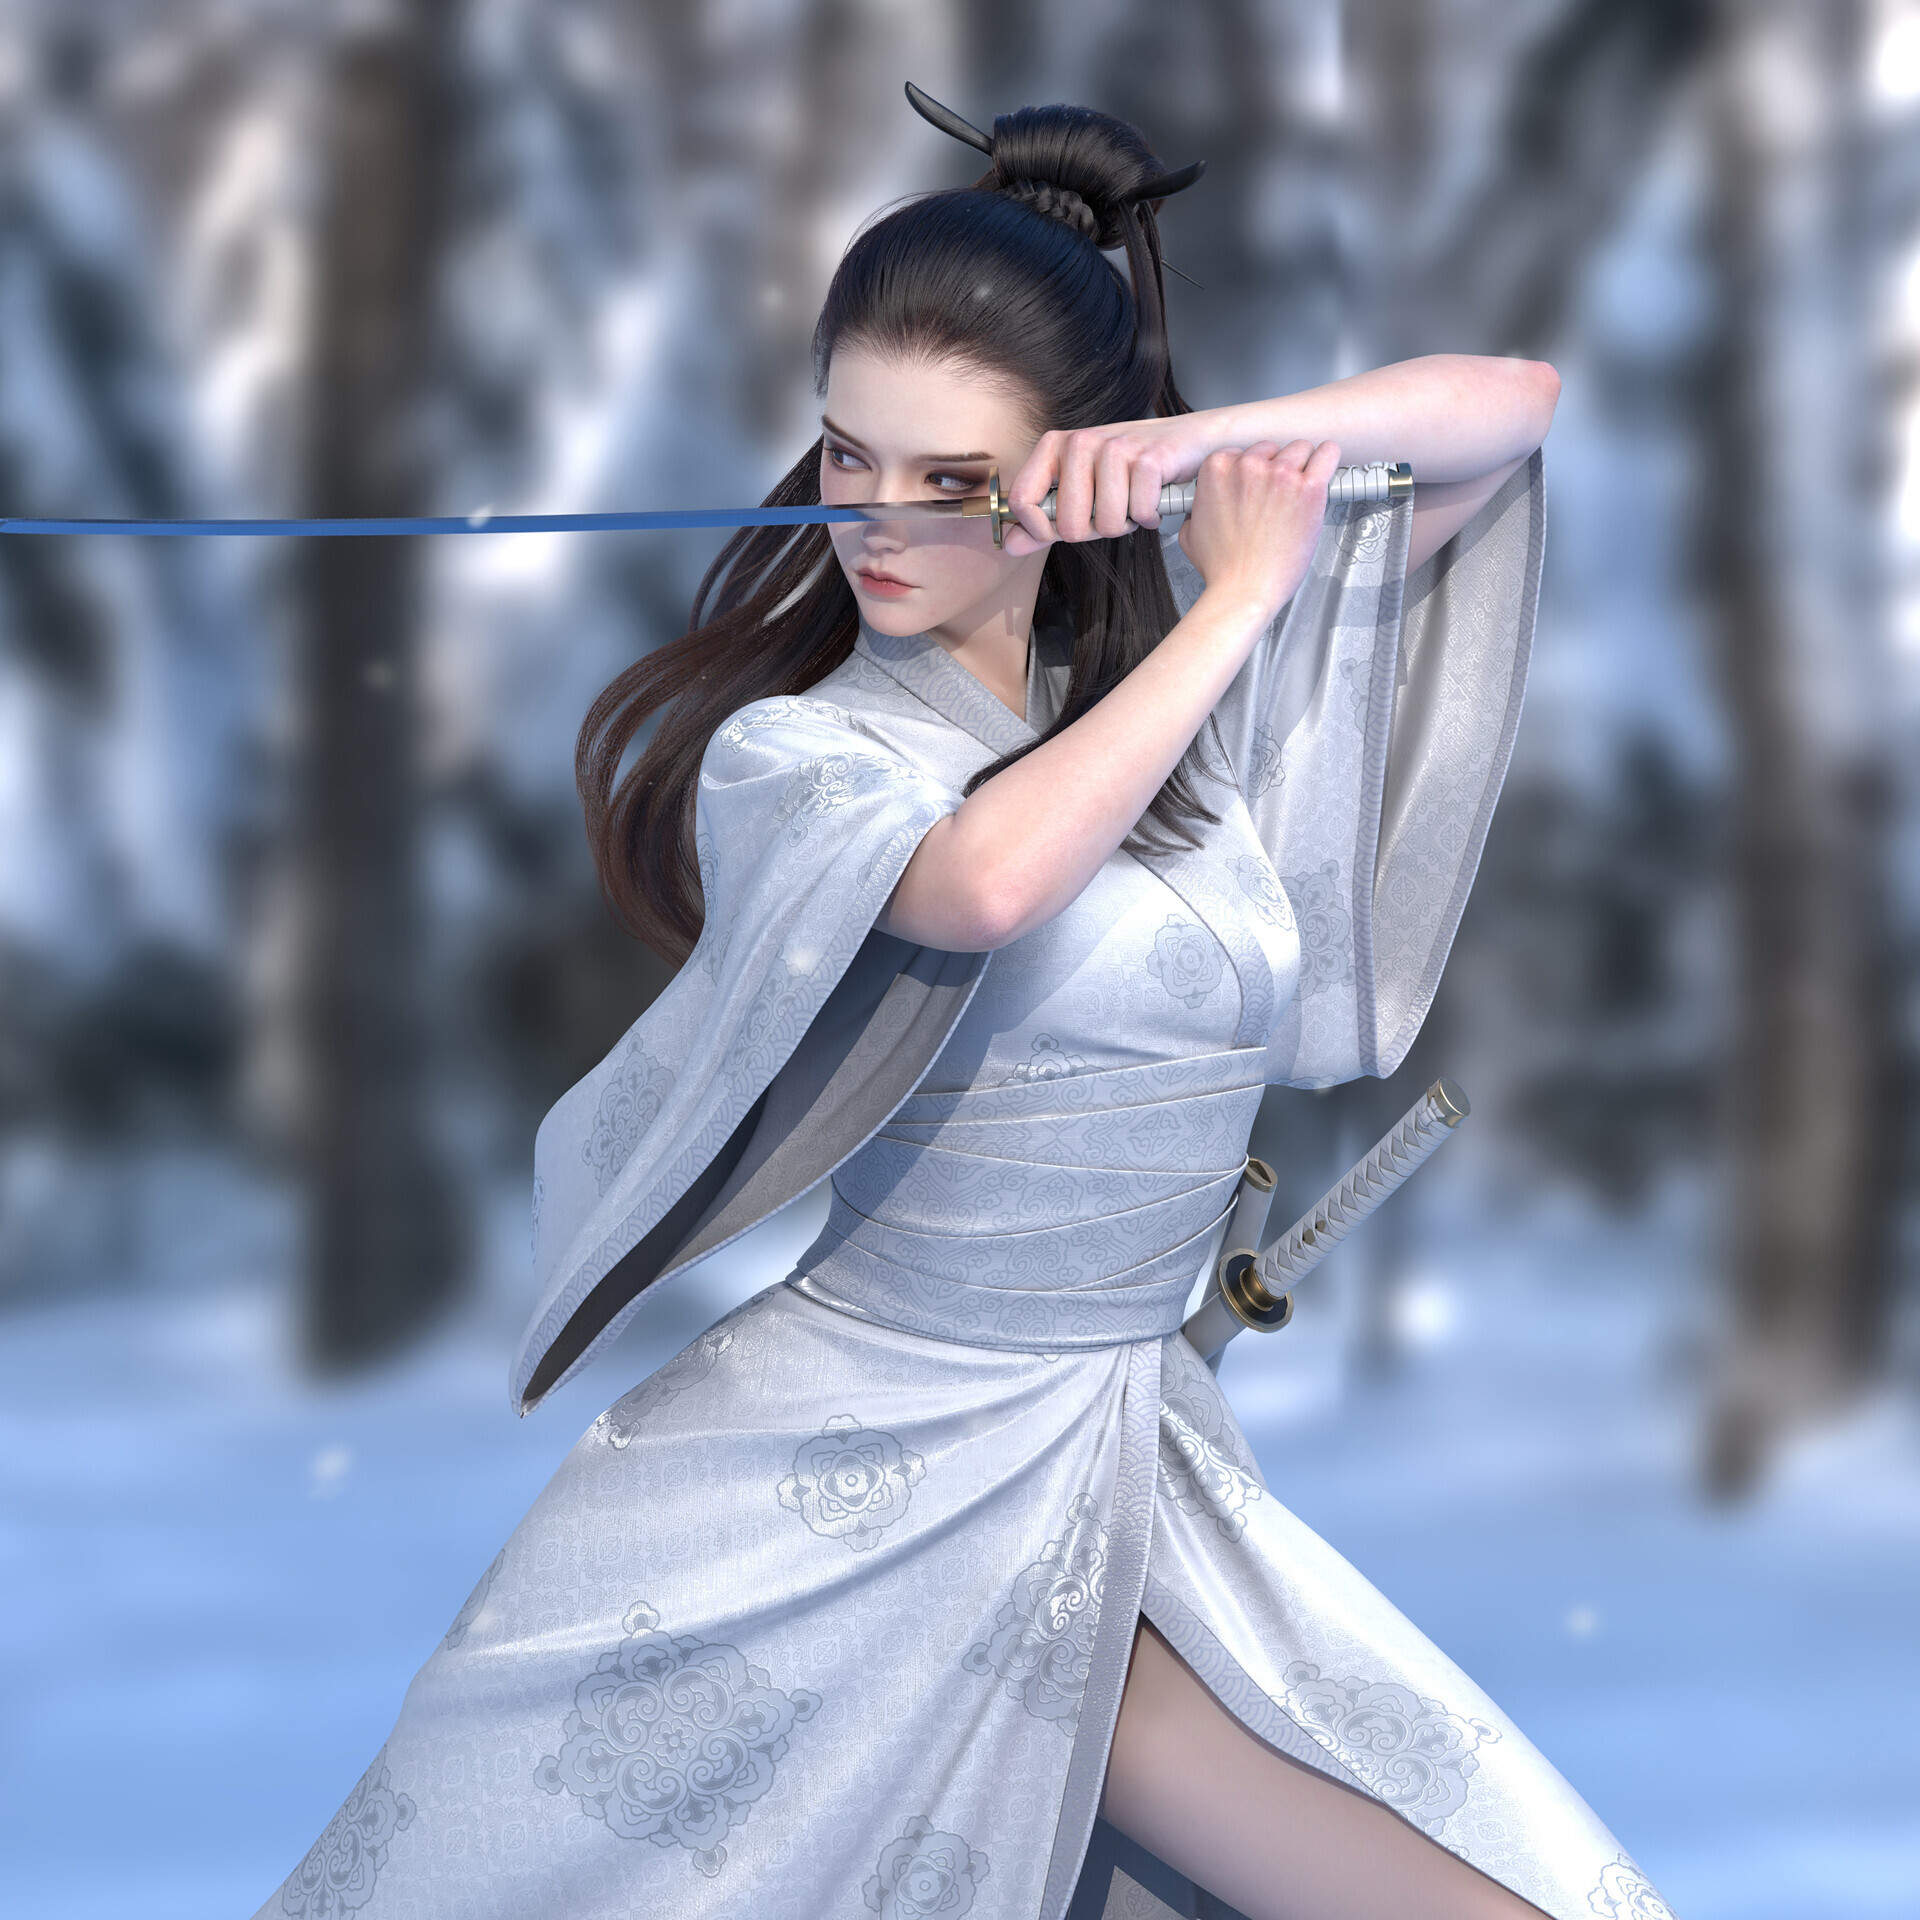 General 1920x1920 digital art artwork illustration CGI sword women with swords women kimono snow white dark hair character design 